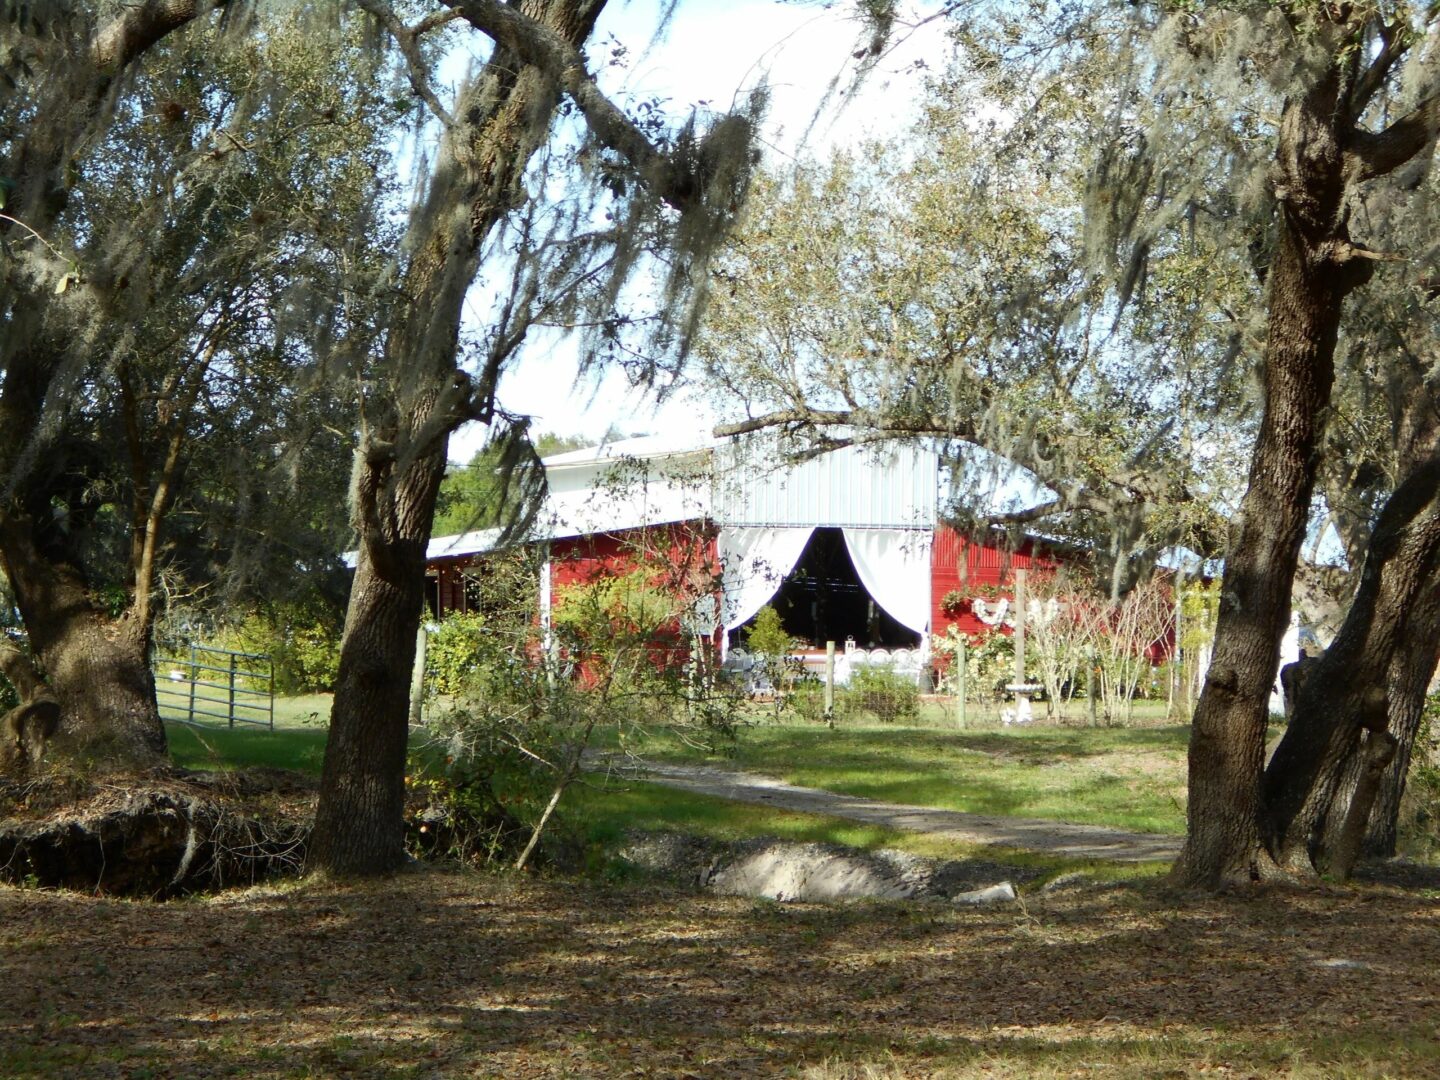 Far view of a barn entrance